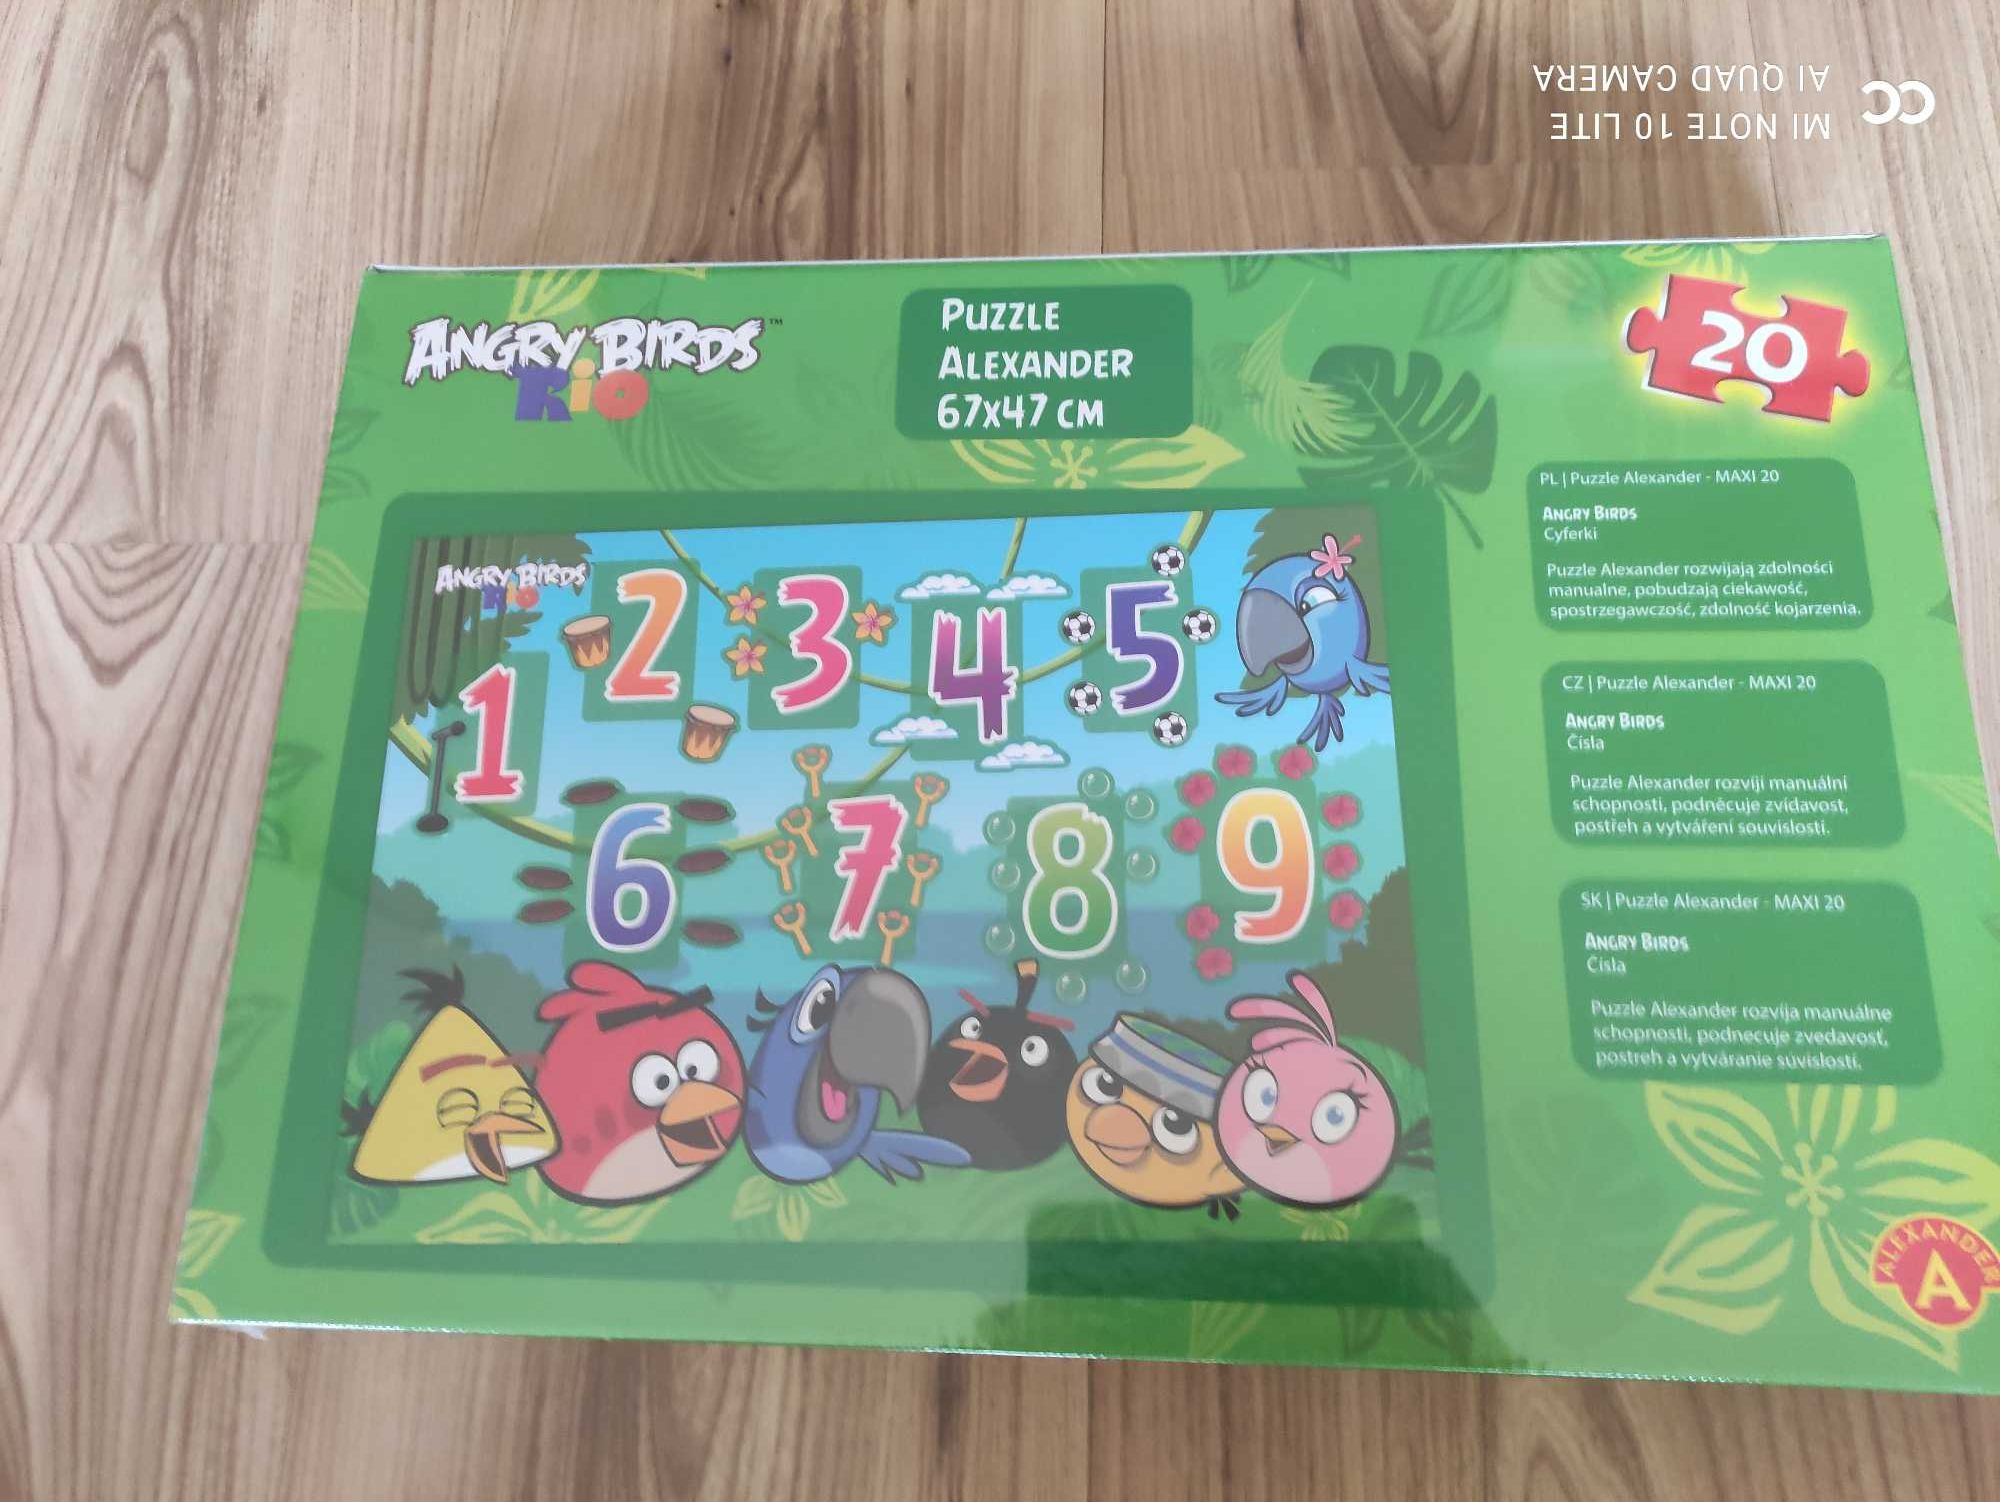 Puzzle maxi 20: cyferki Angry Birds Rio